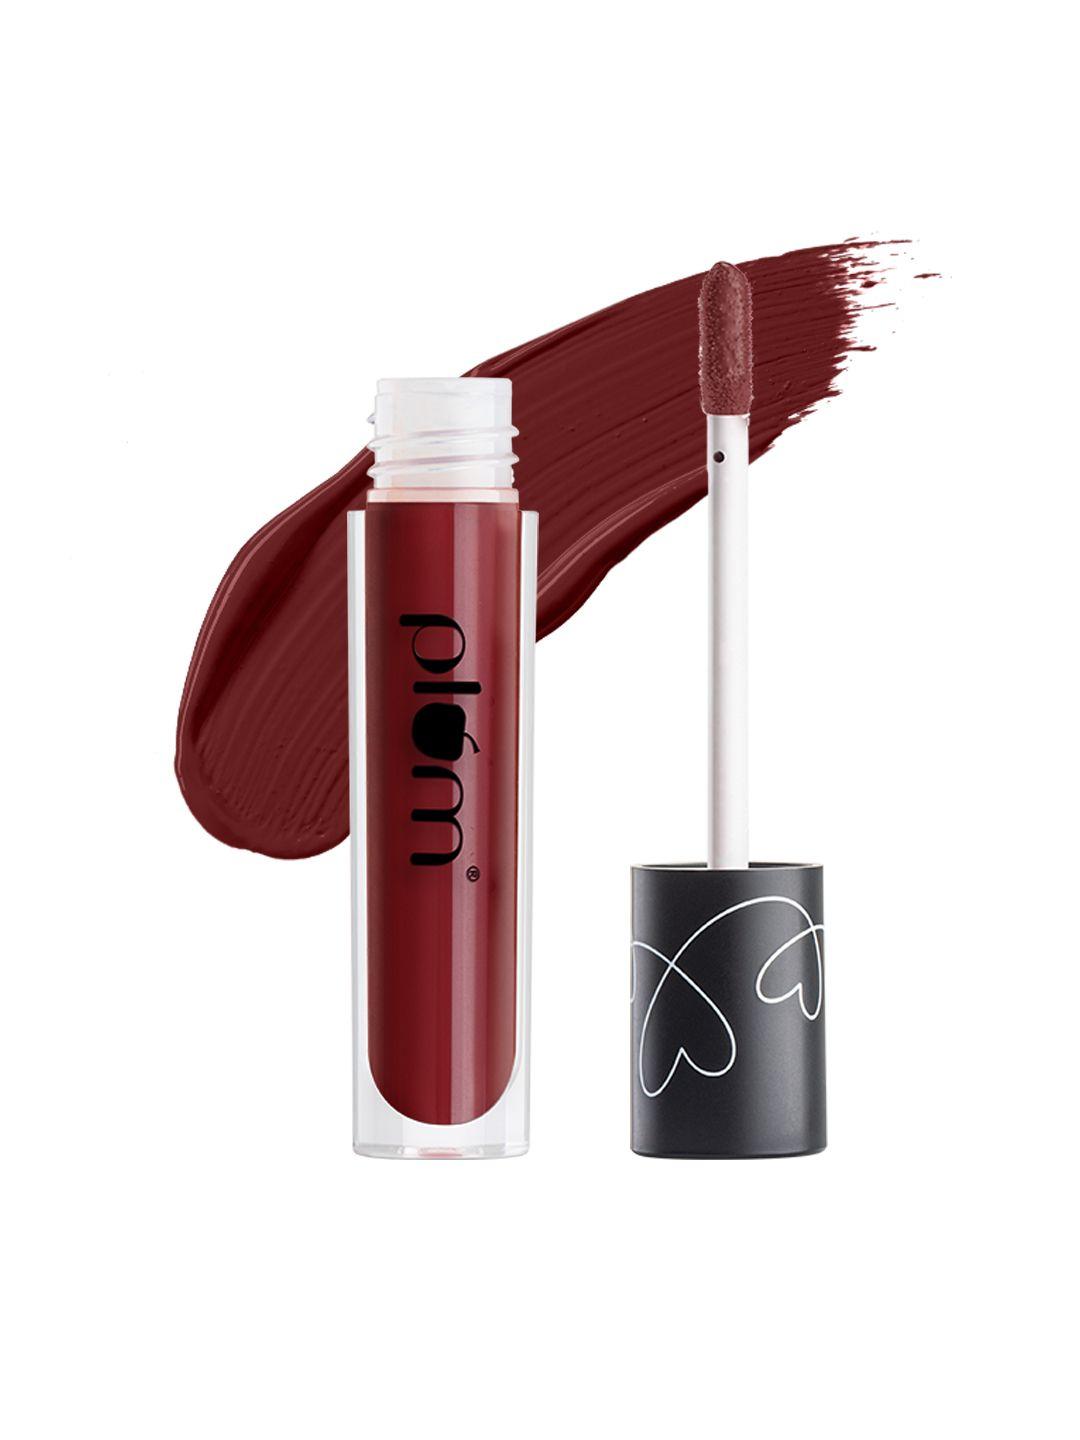 plum non-drying matte in heaven liquid lipstick 4.5ml - wine to go 140